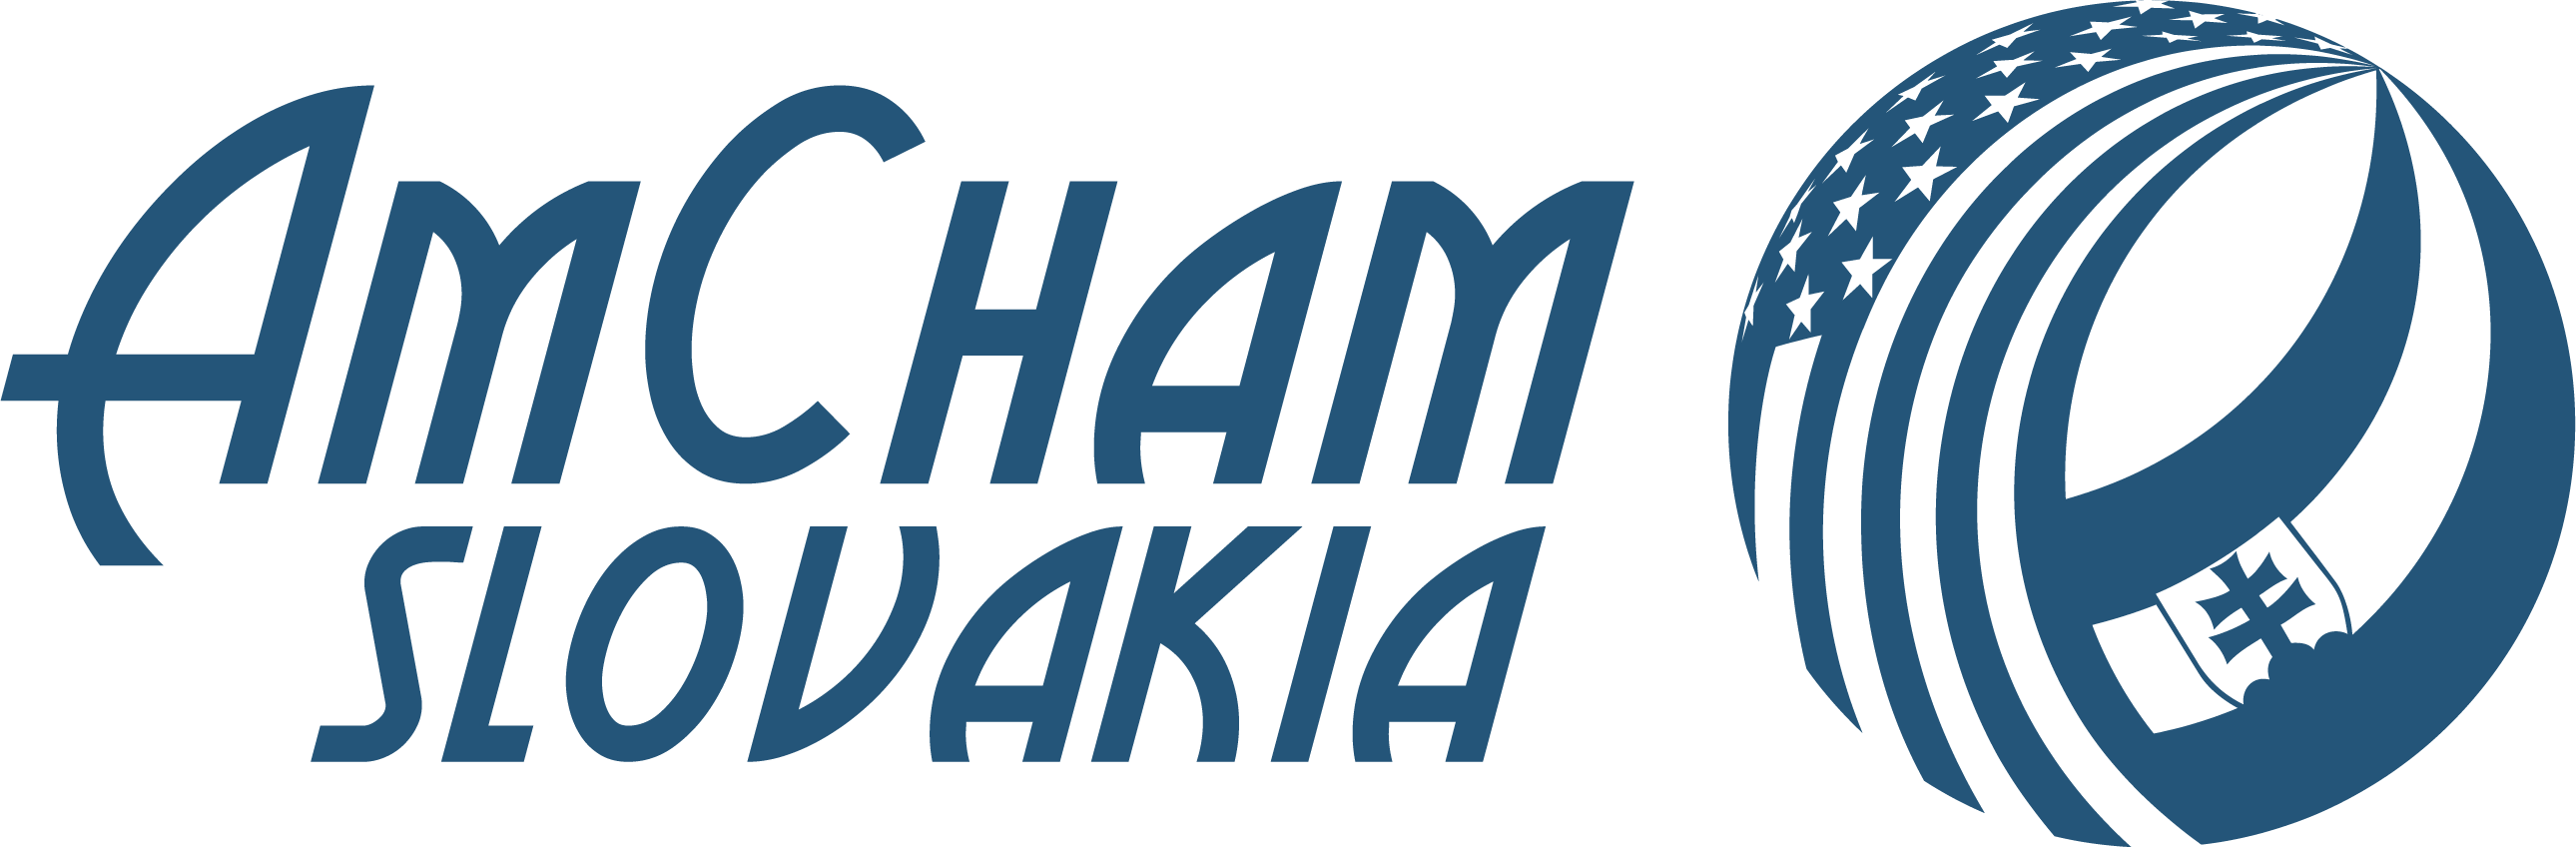 amcham2020_logo_HLAVNE